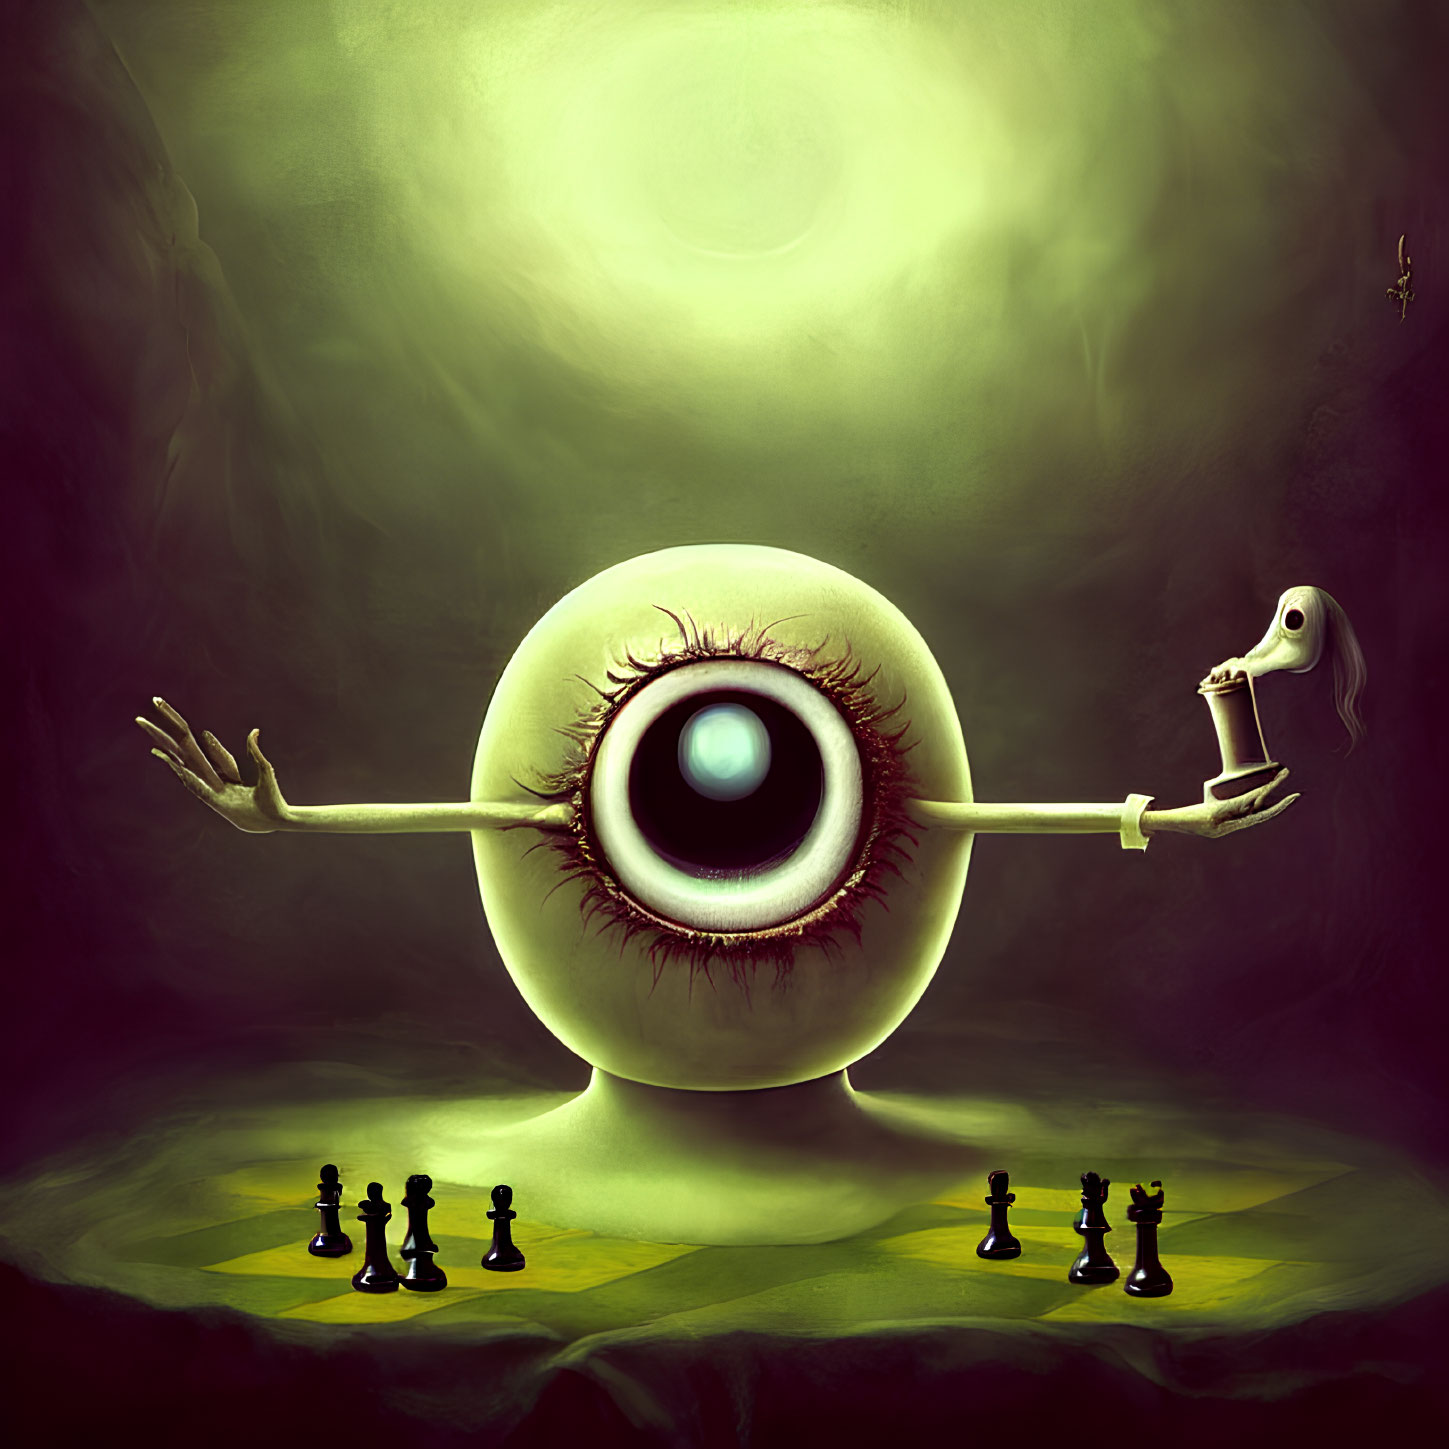 Surreal artwork: Large eyeball with arms, bird skull head, playing chess under greenish